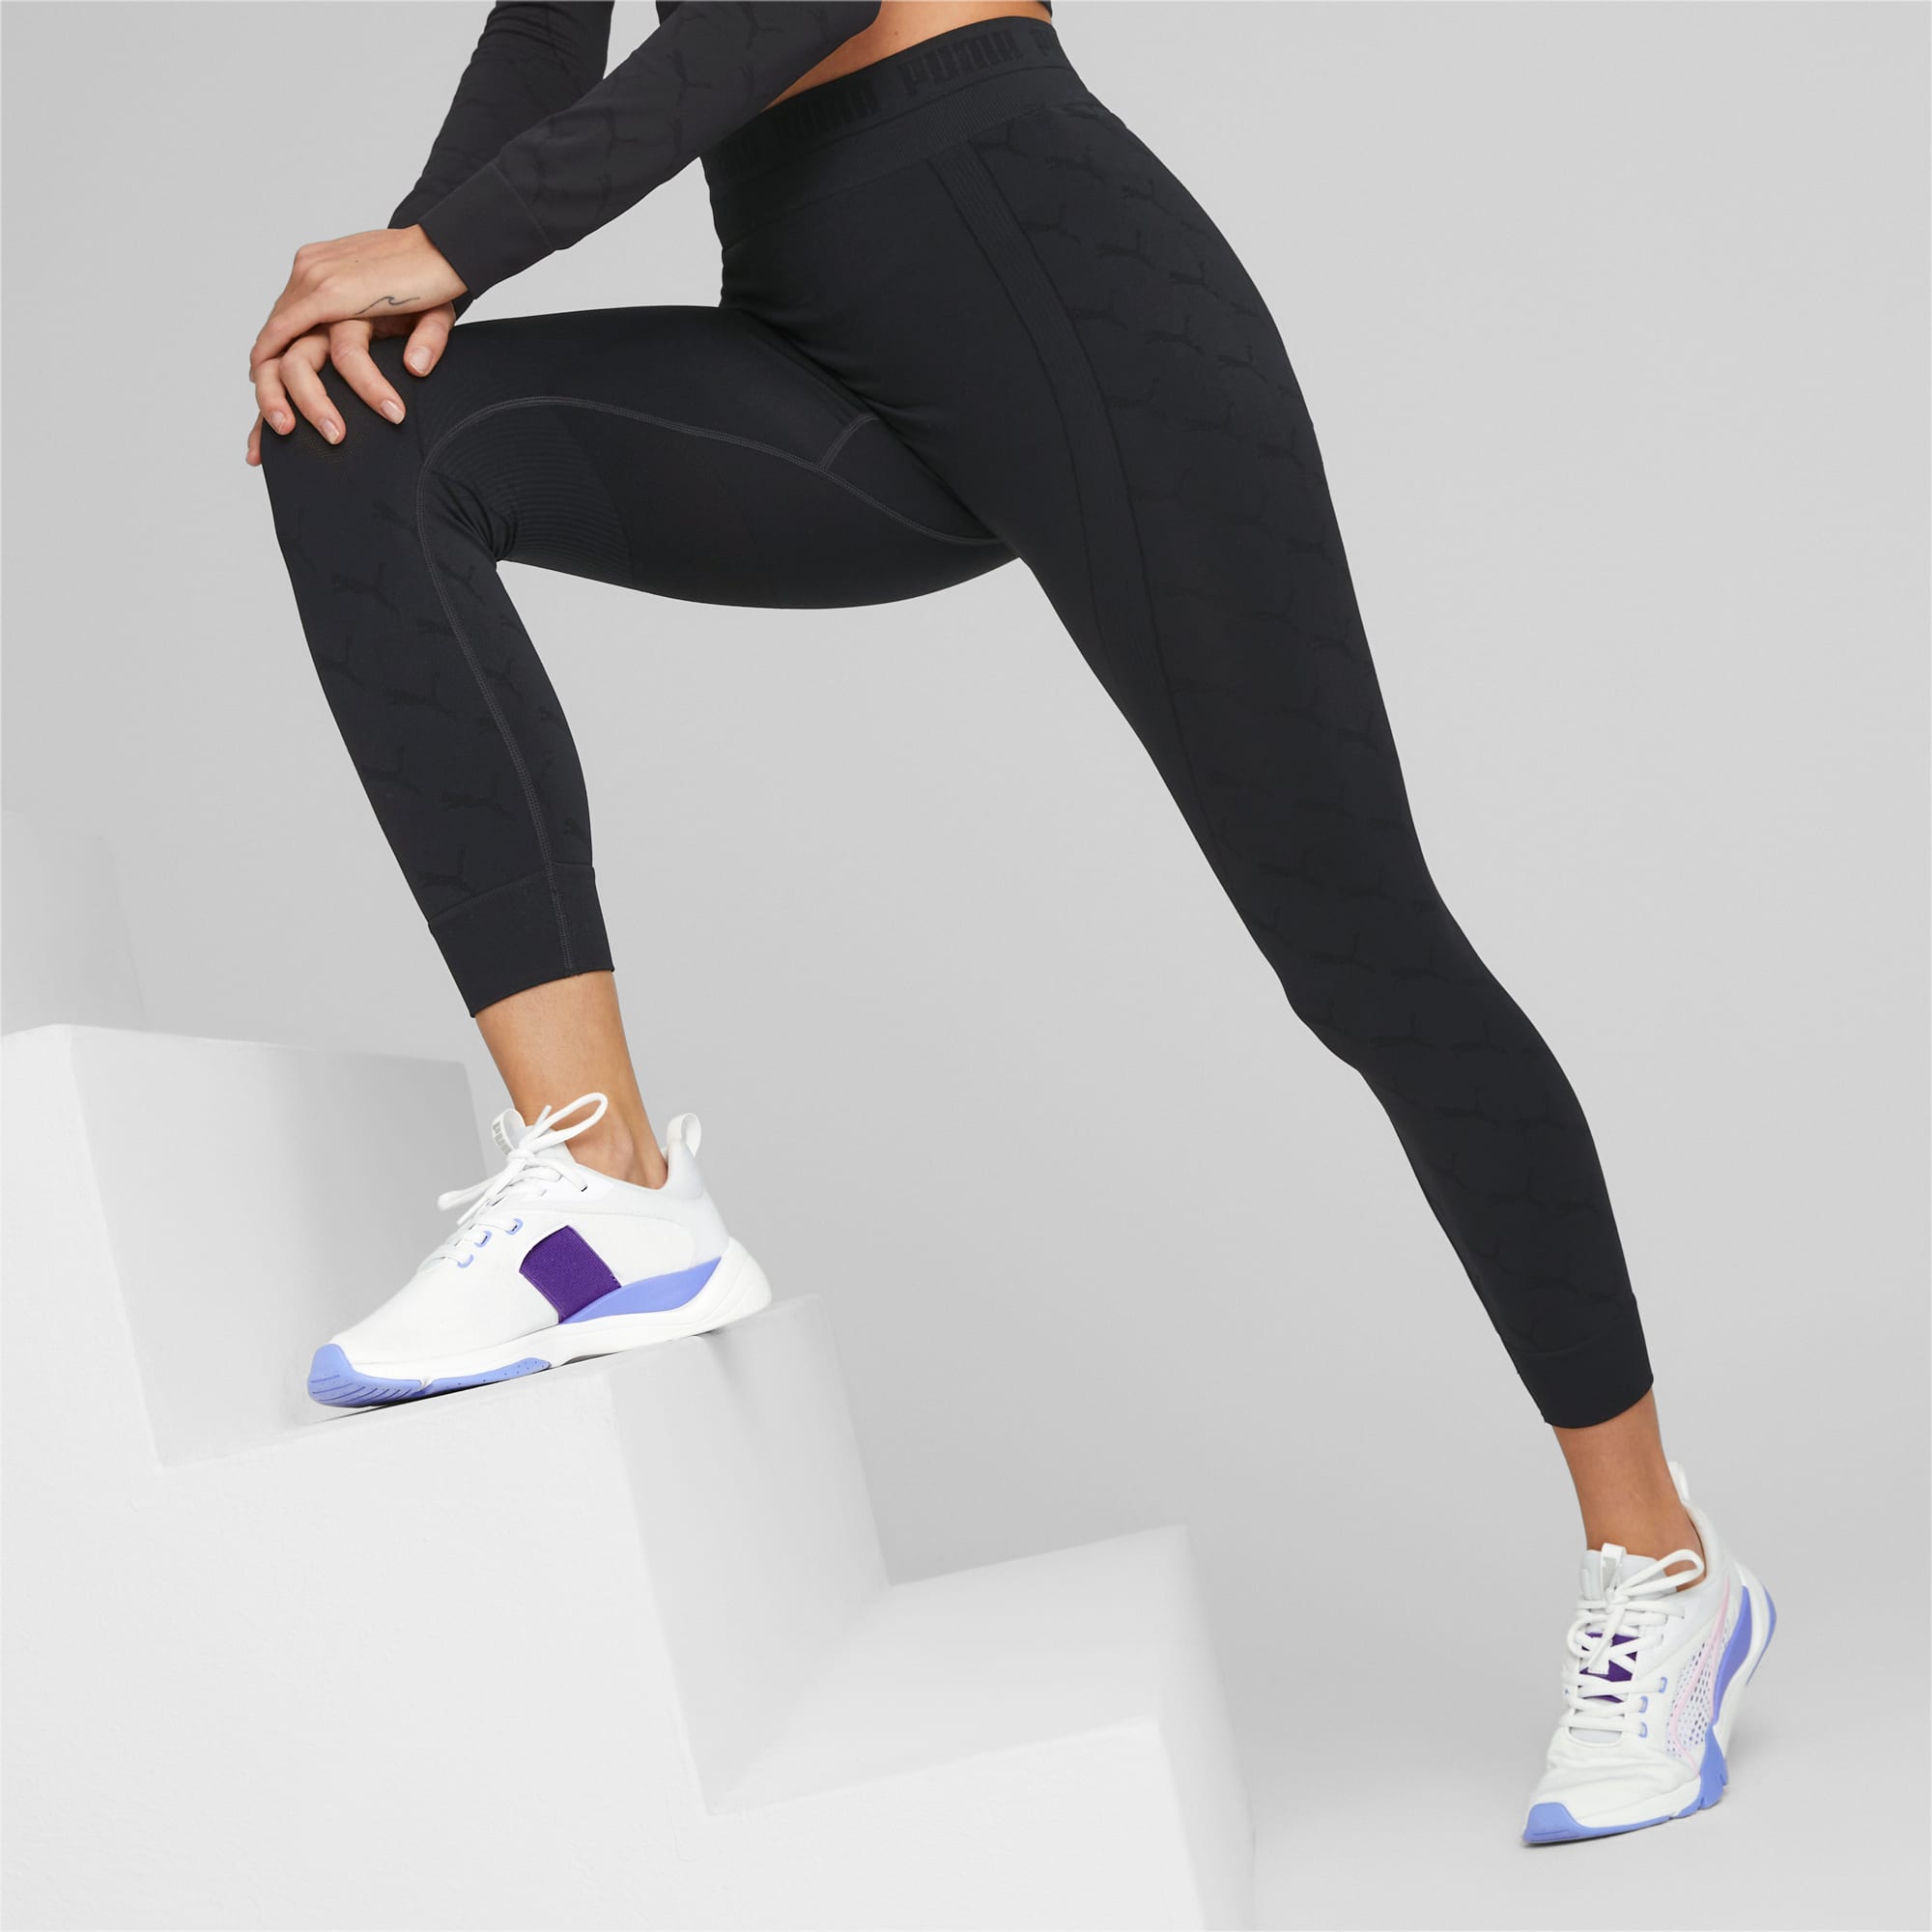 DZ, Graphic Wordmark Leggings - White, Workout Leggings Women